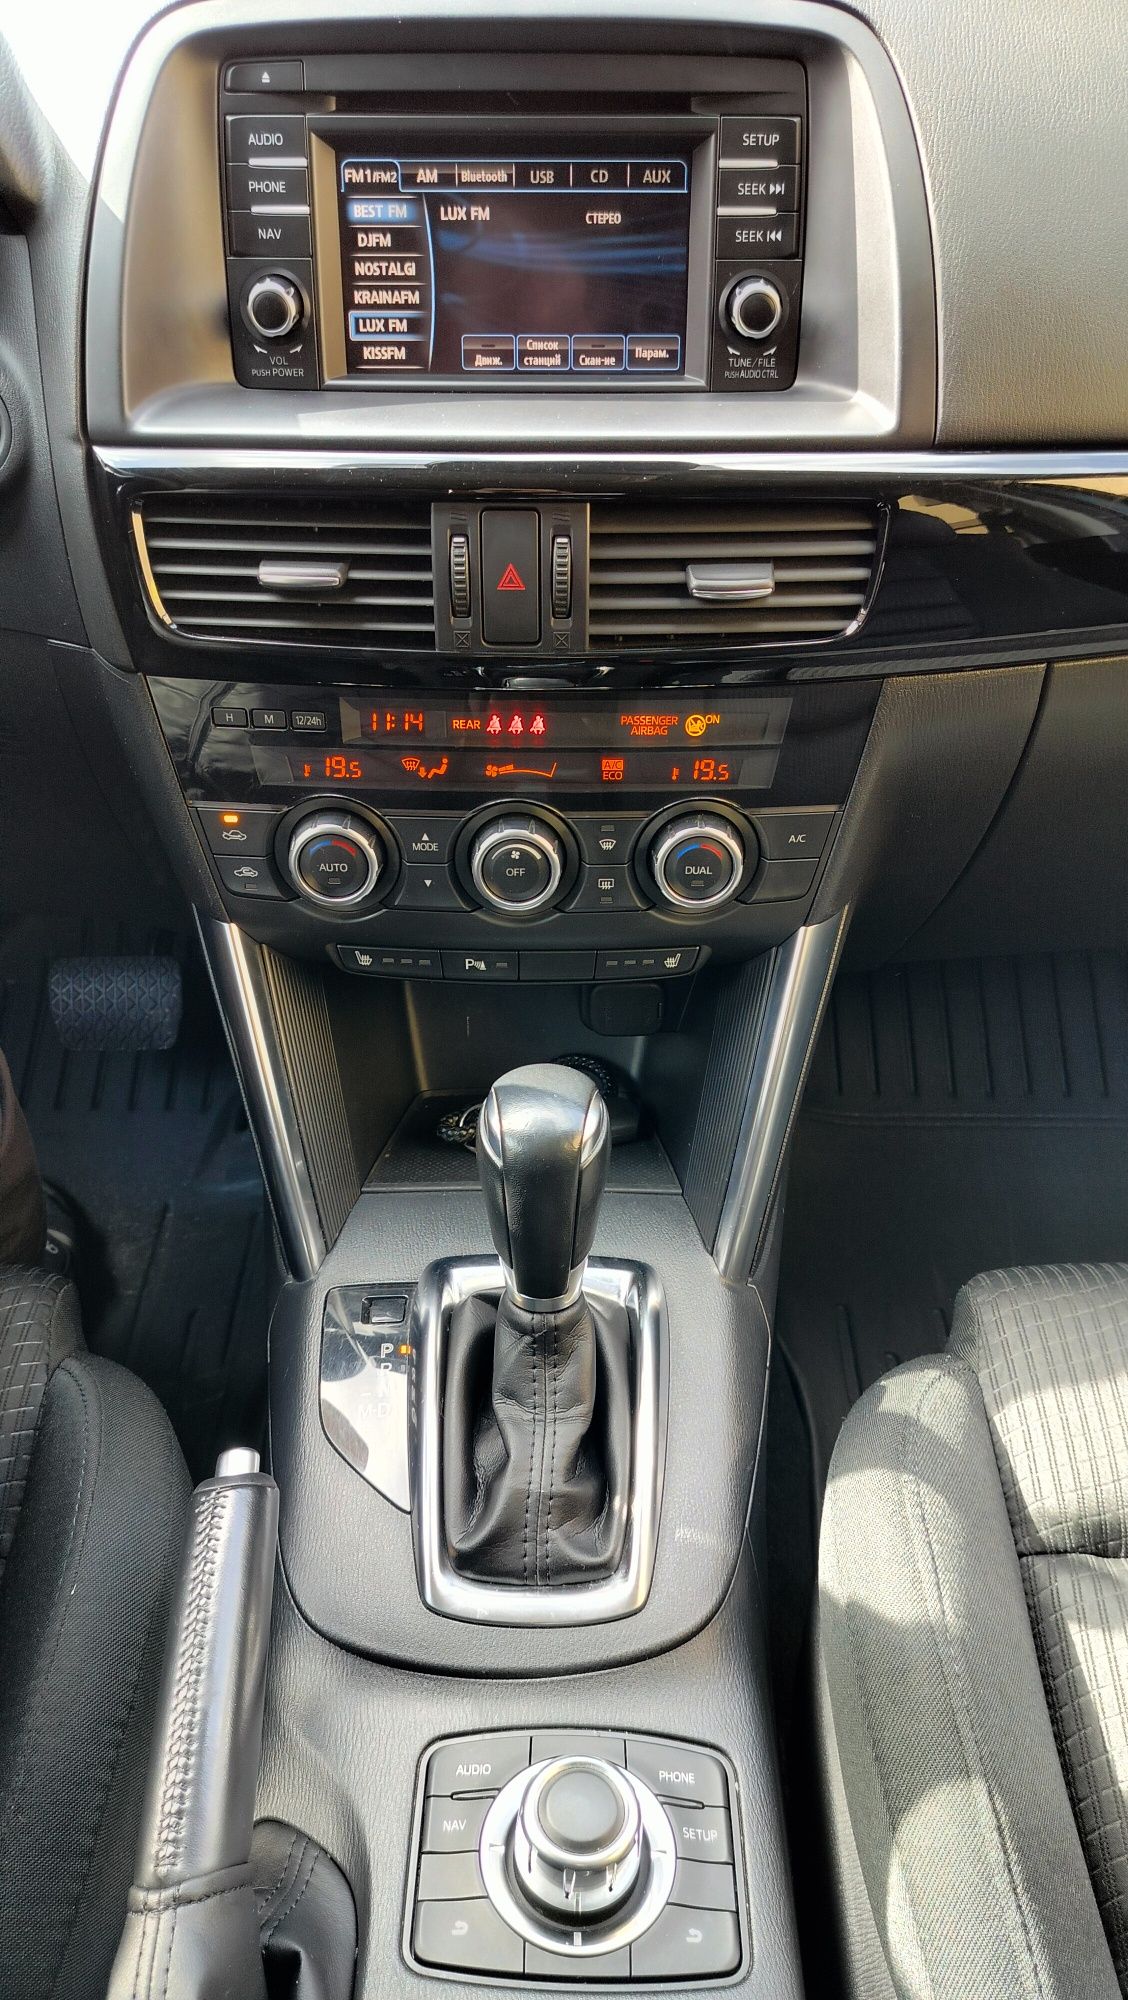 Mazda CX5, 2.2 Diesel, 2014 р.в.